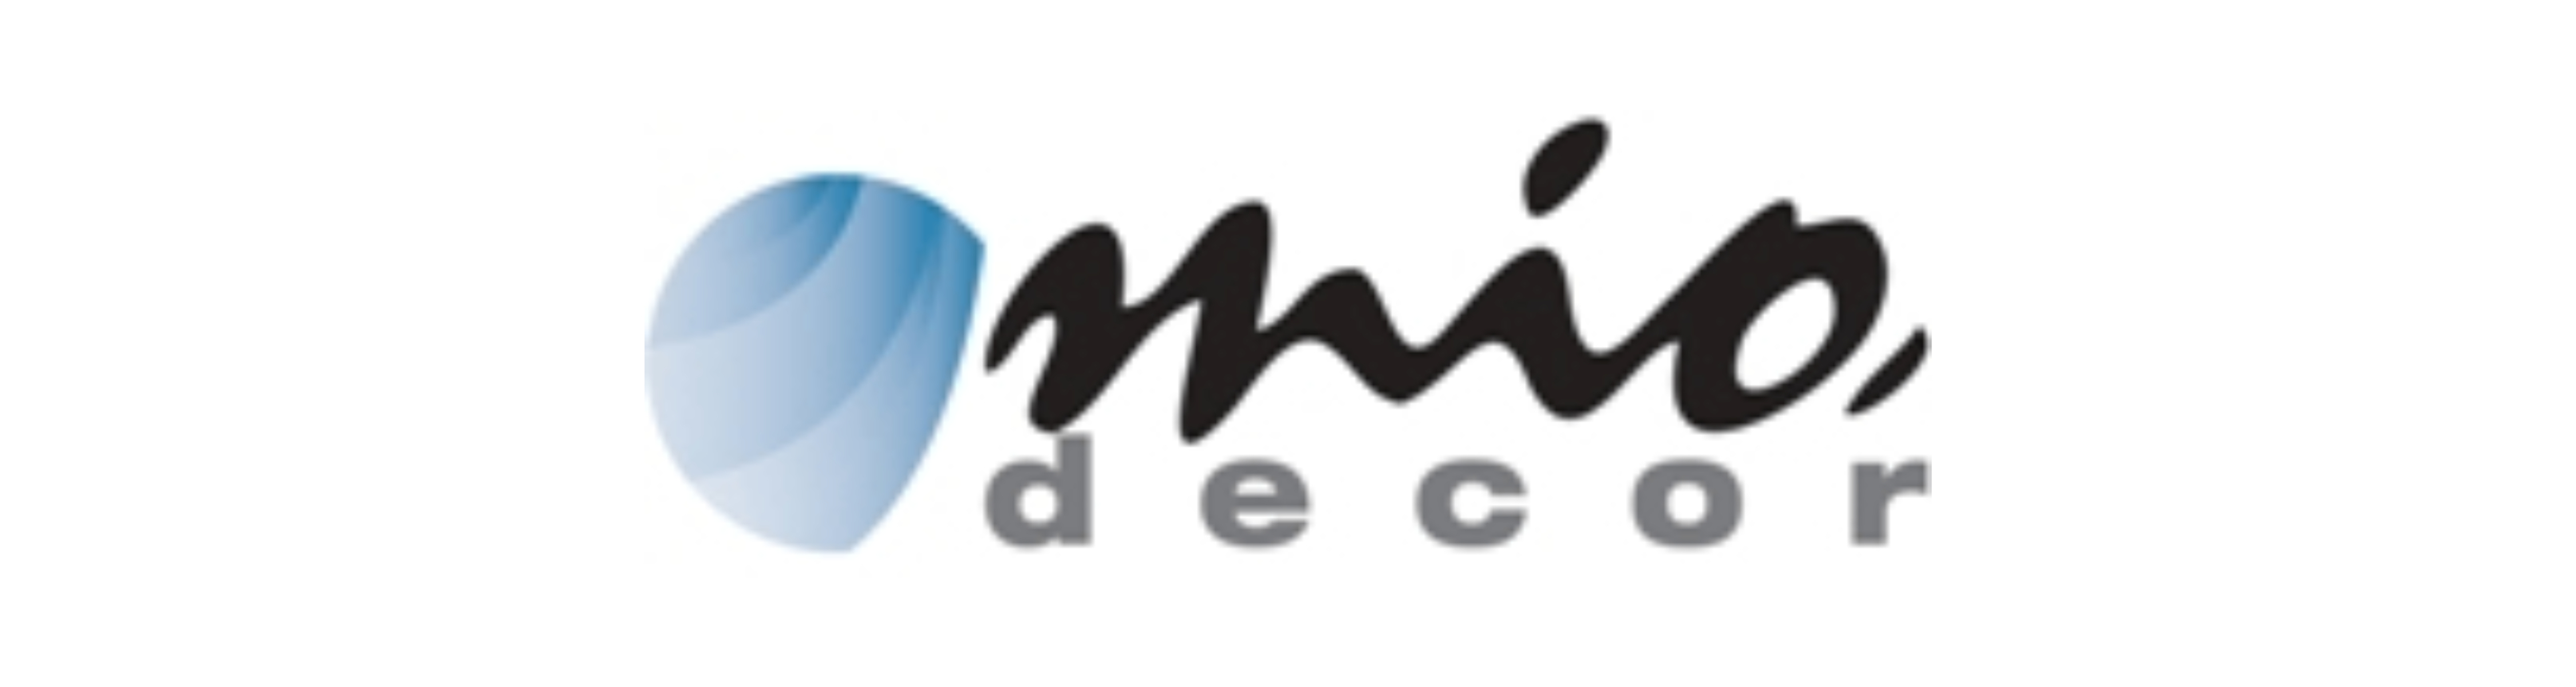 Miodecor logo, dystrybutor elektrondt.pl